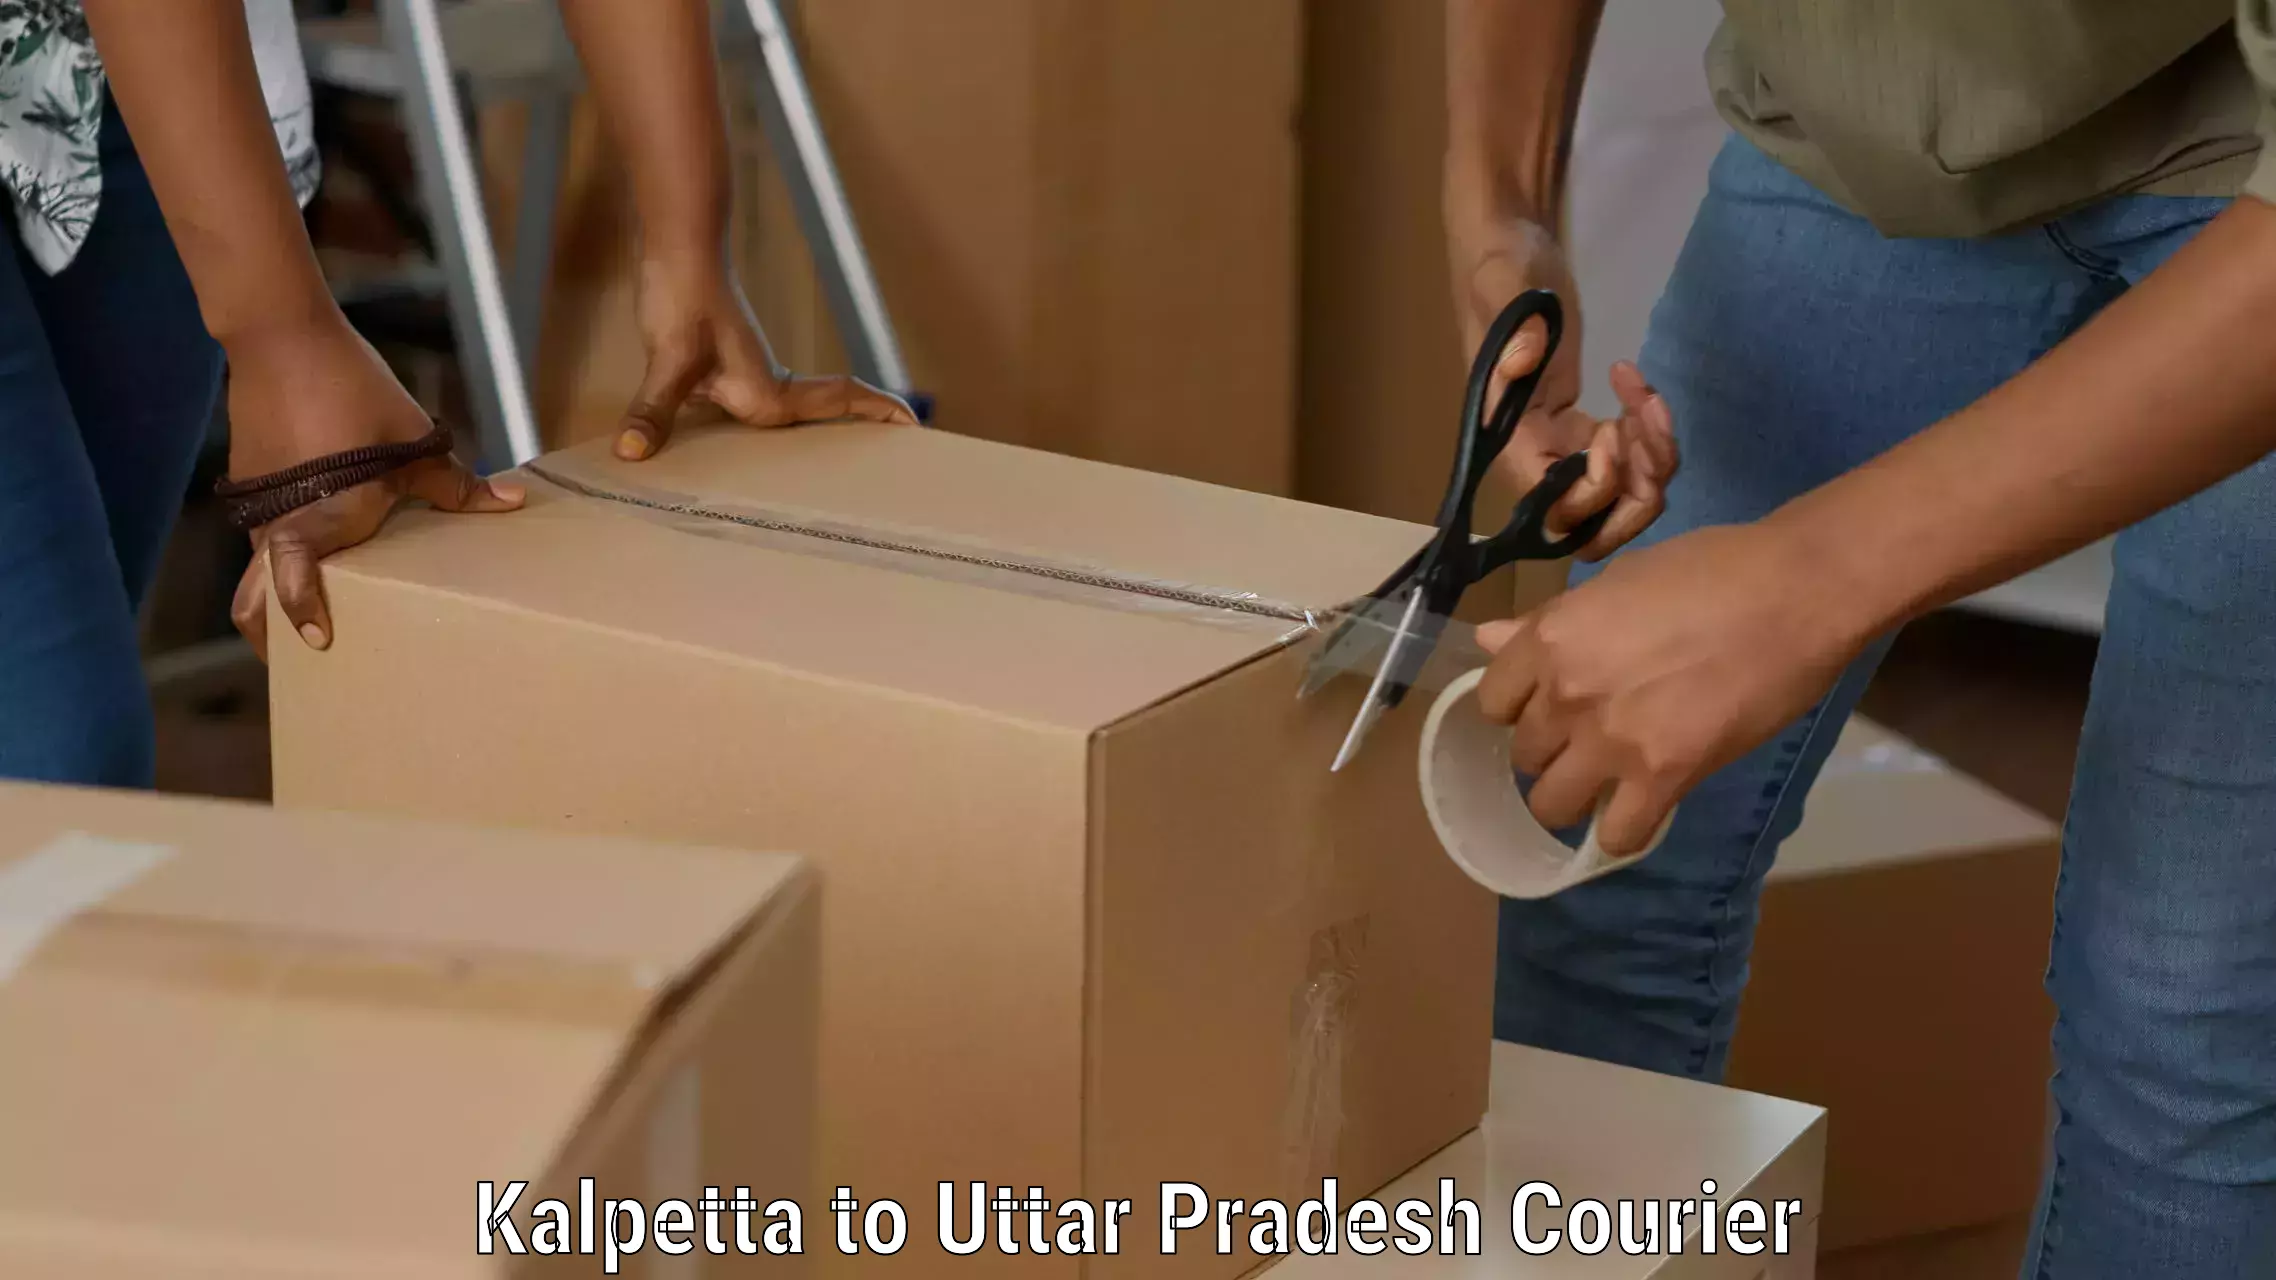 Professional courier handling Kalpetta to Vrindavan